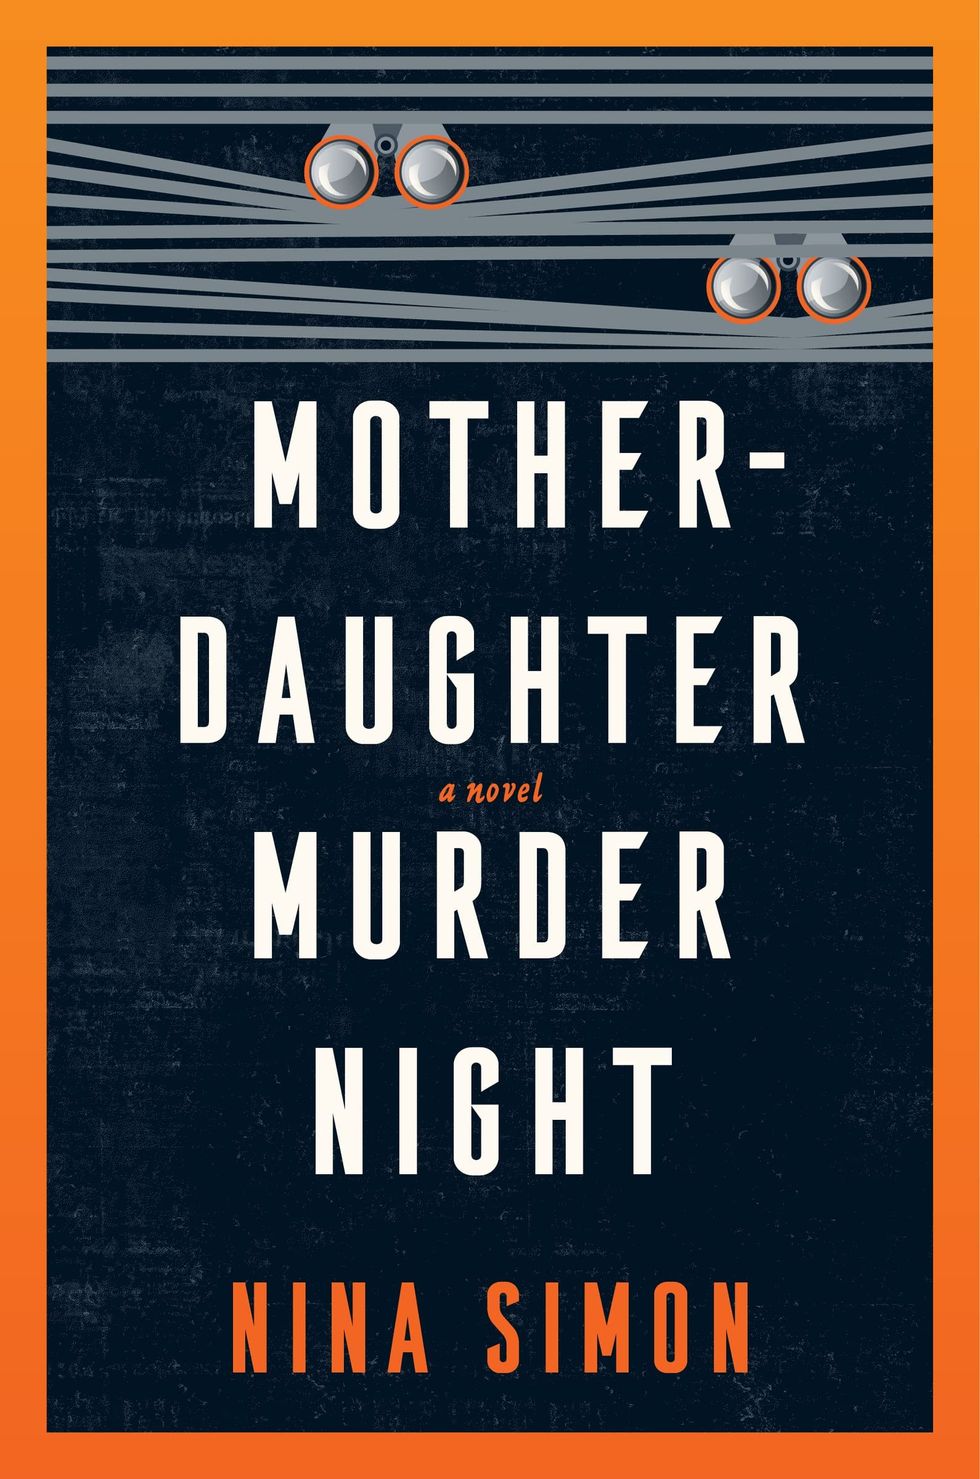 "Mother-Daughter Murder Night" by Nina Simon